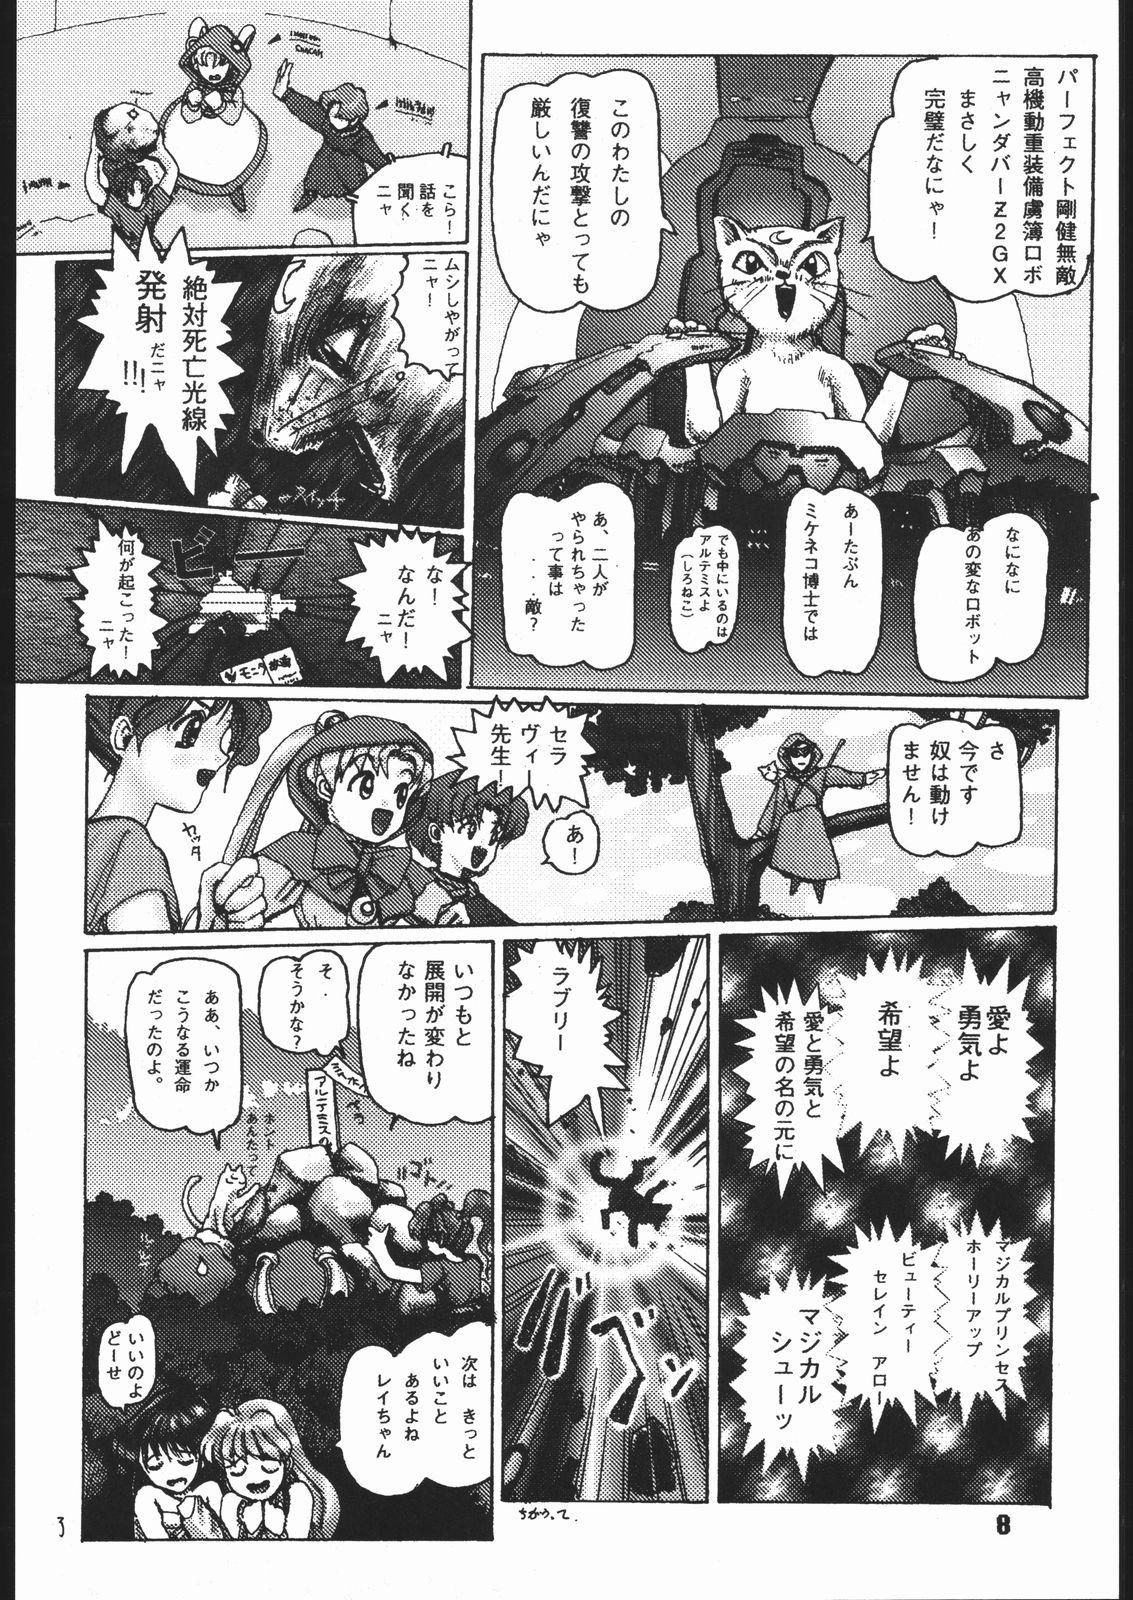 Flaca miracle romance 3 - Sailor moon Tenchi muyo Time - Page 9